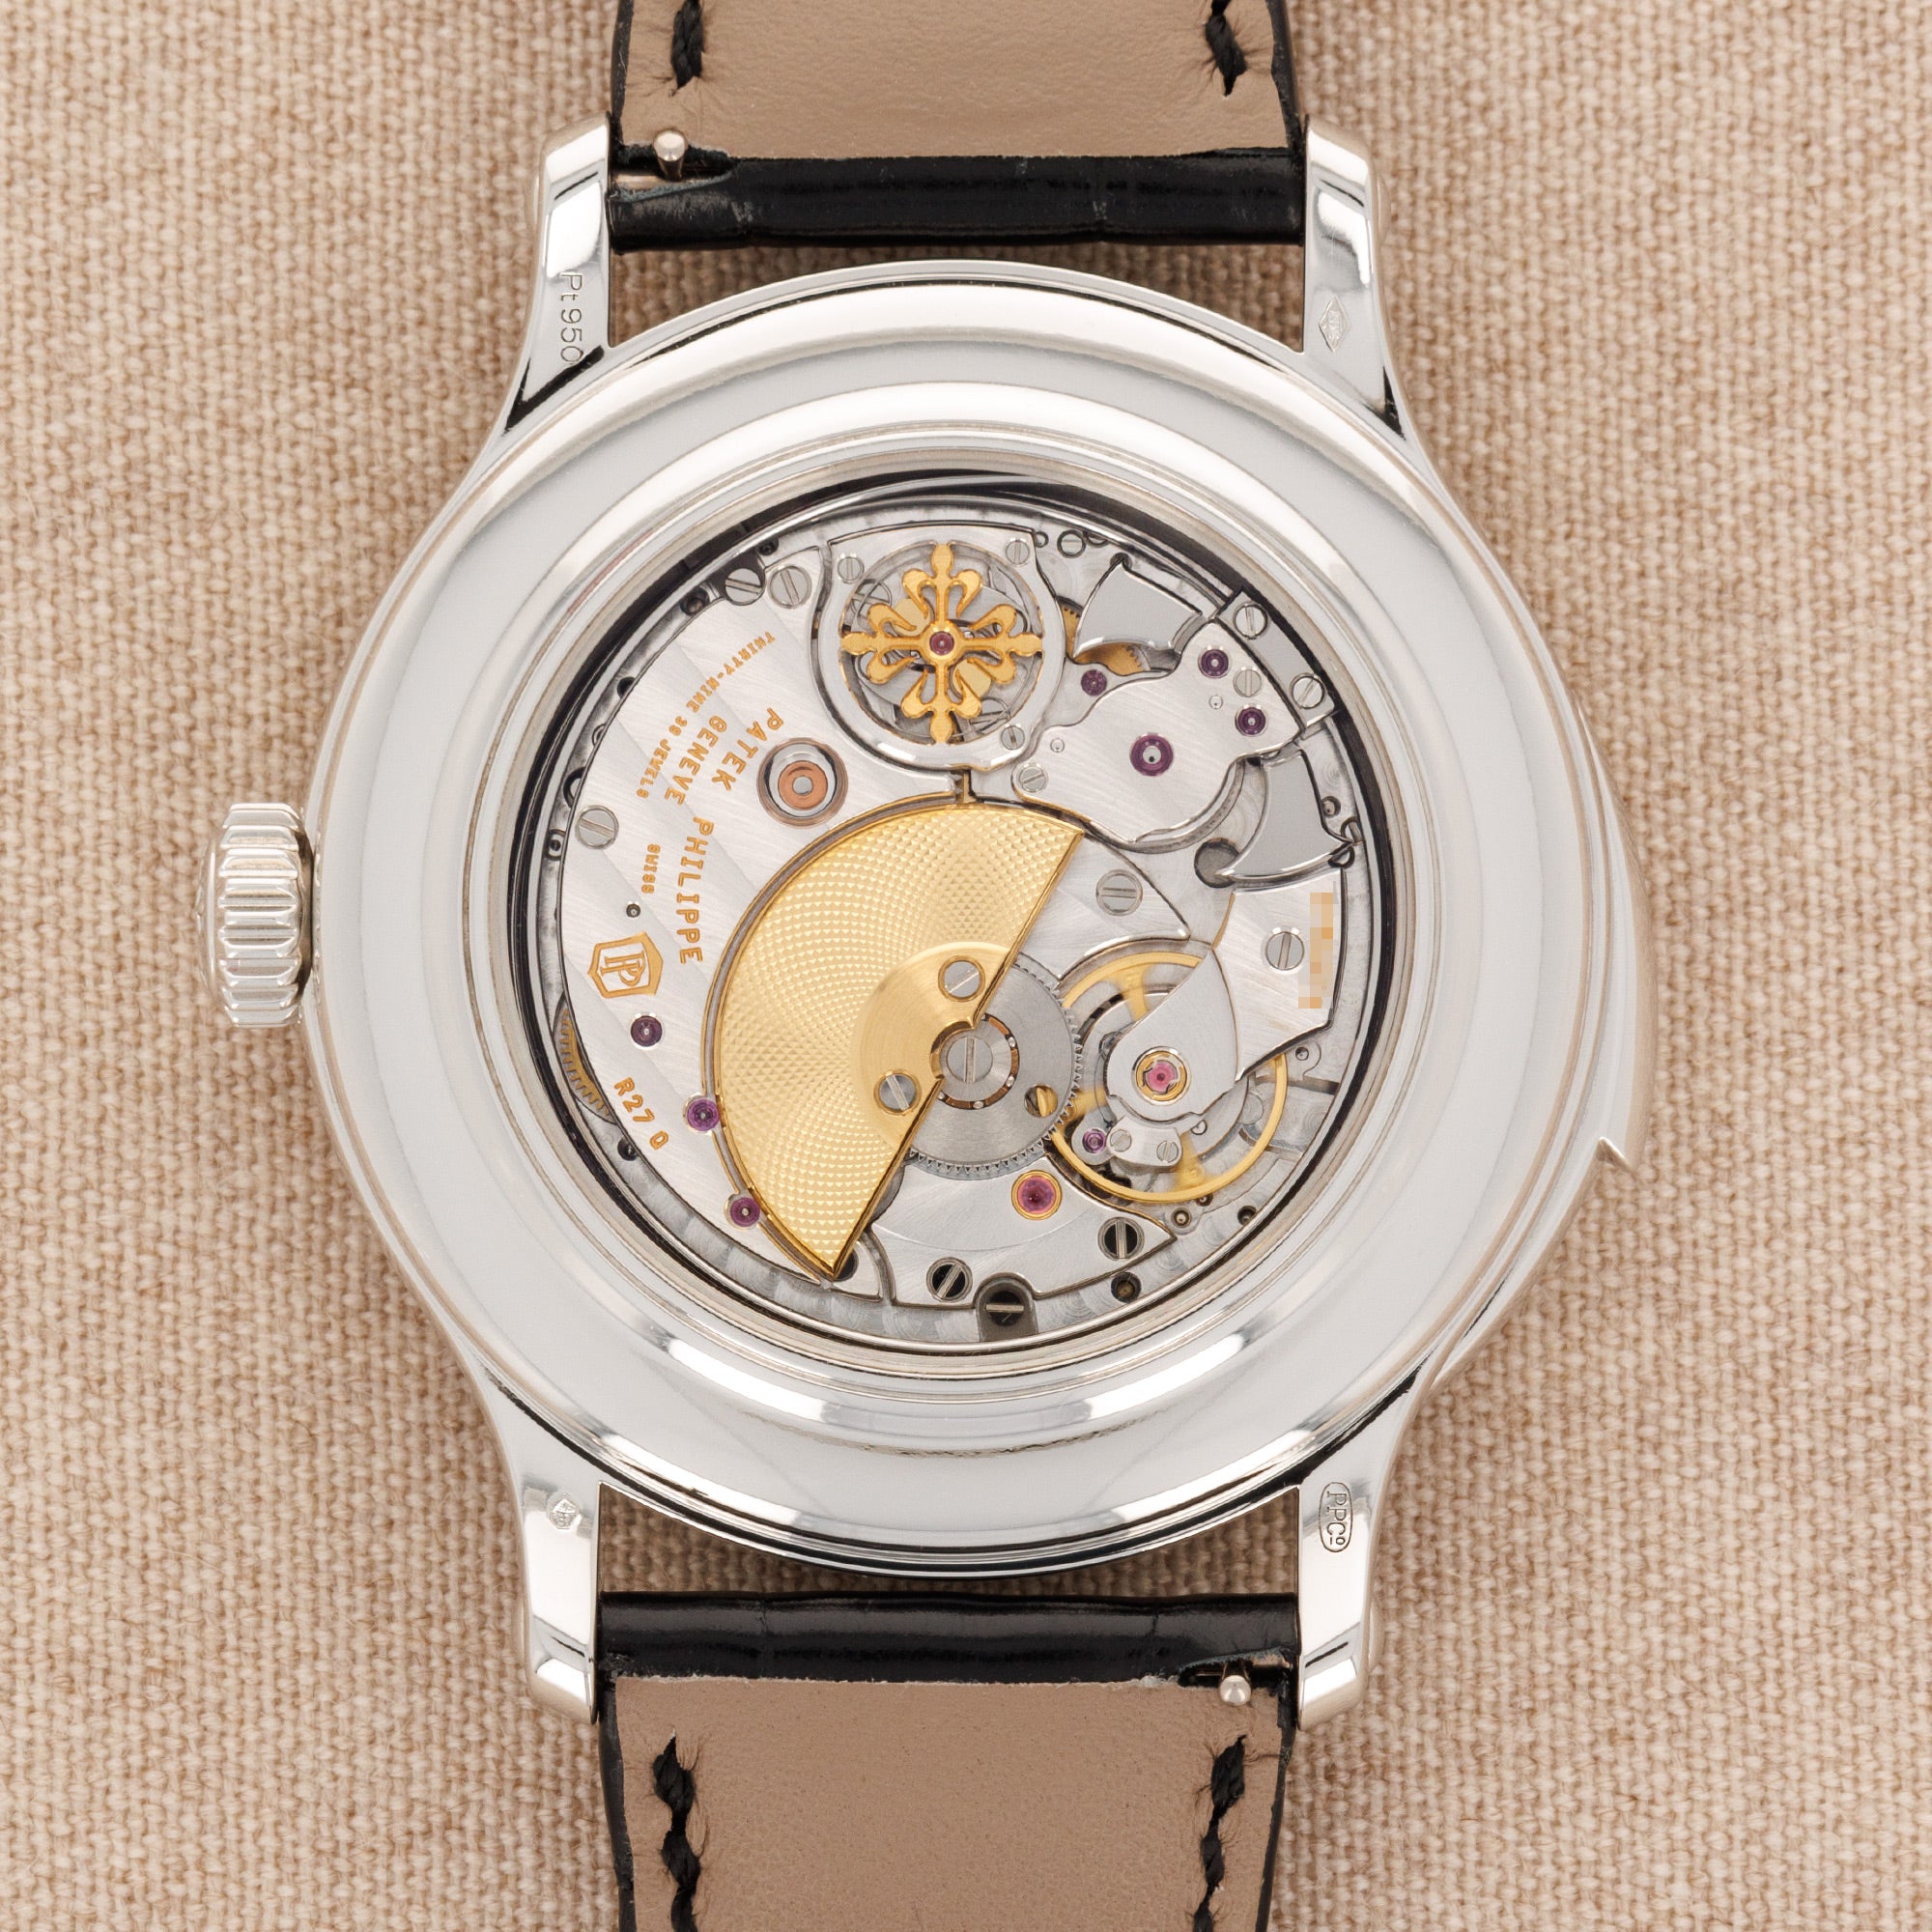 Patek Philippe - Patek Philippe Platinum Perpetual Calendar Minute Repeater Watch Ref. 5374 - The Keystone Watches